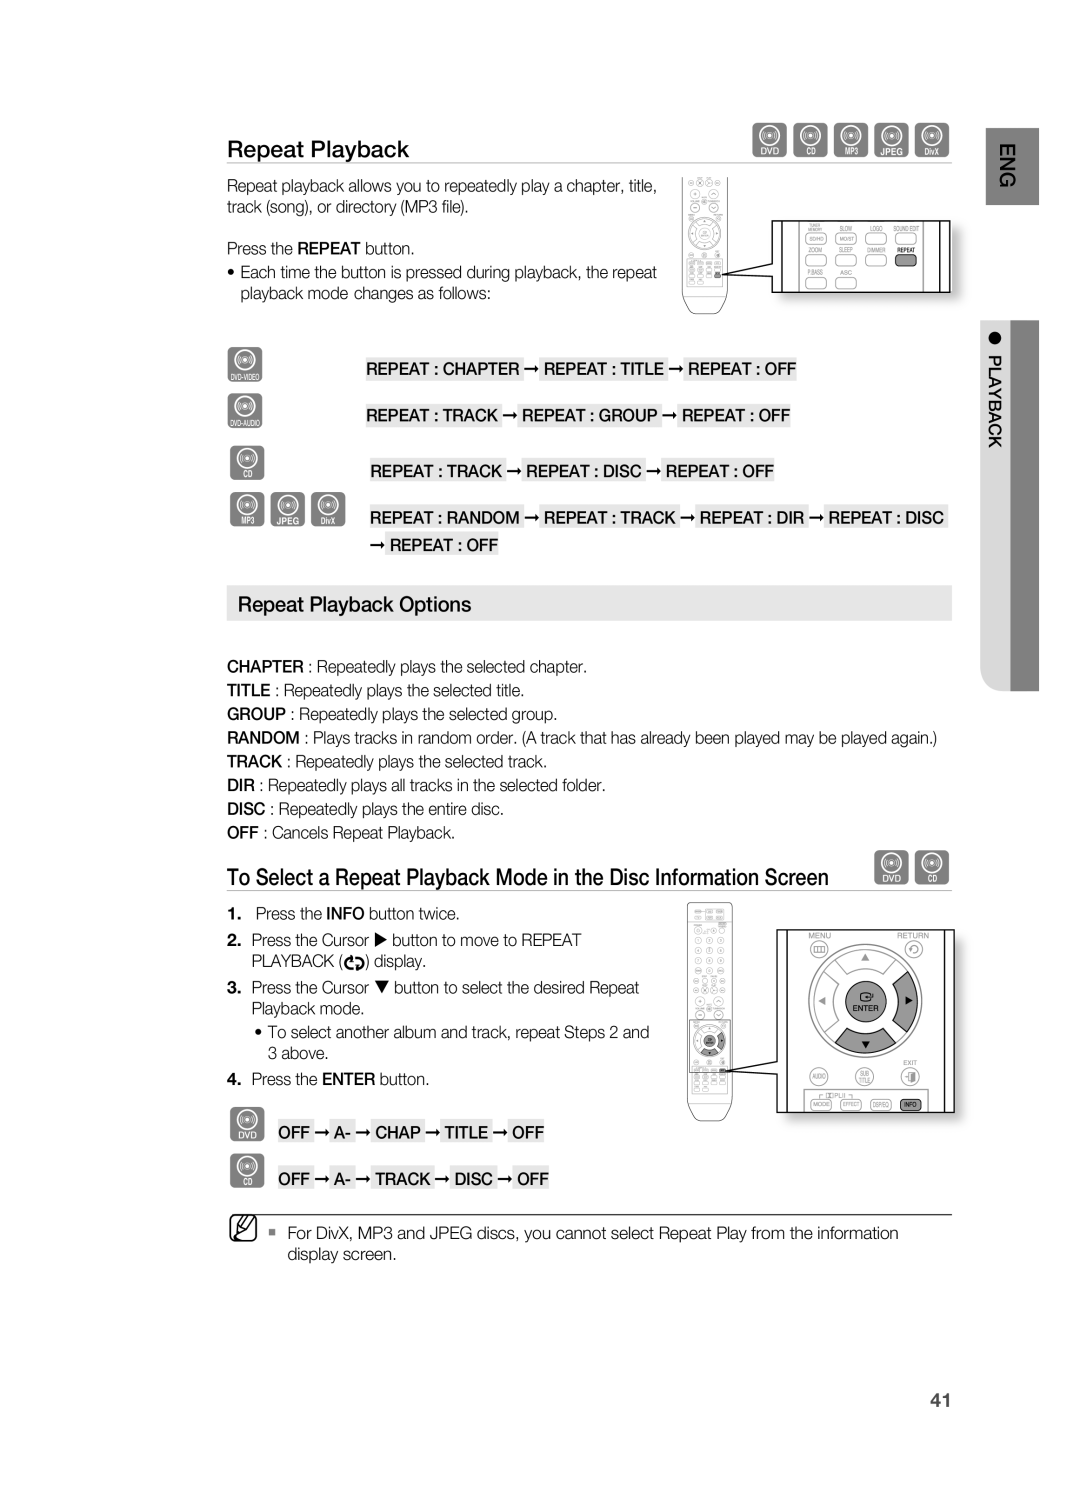 Samsung HT-TWZ415 user manual dBAGD, repeat Playback Options 